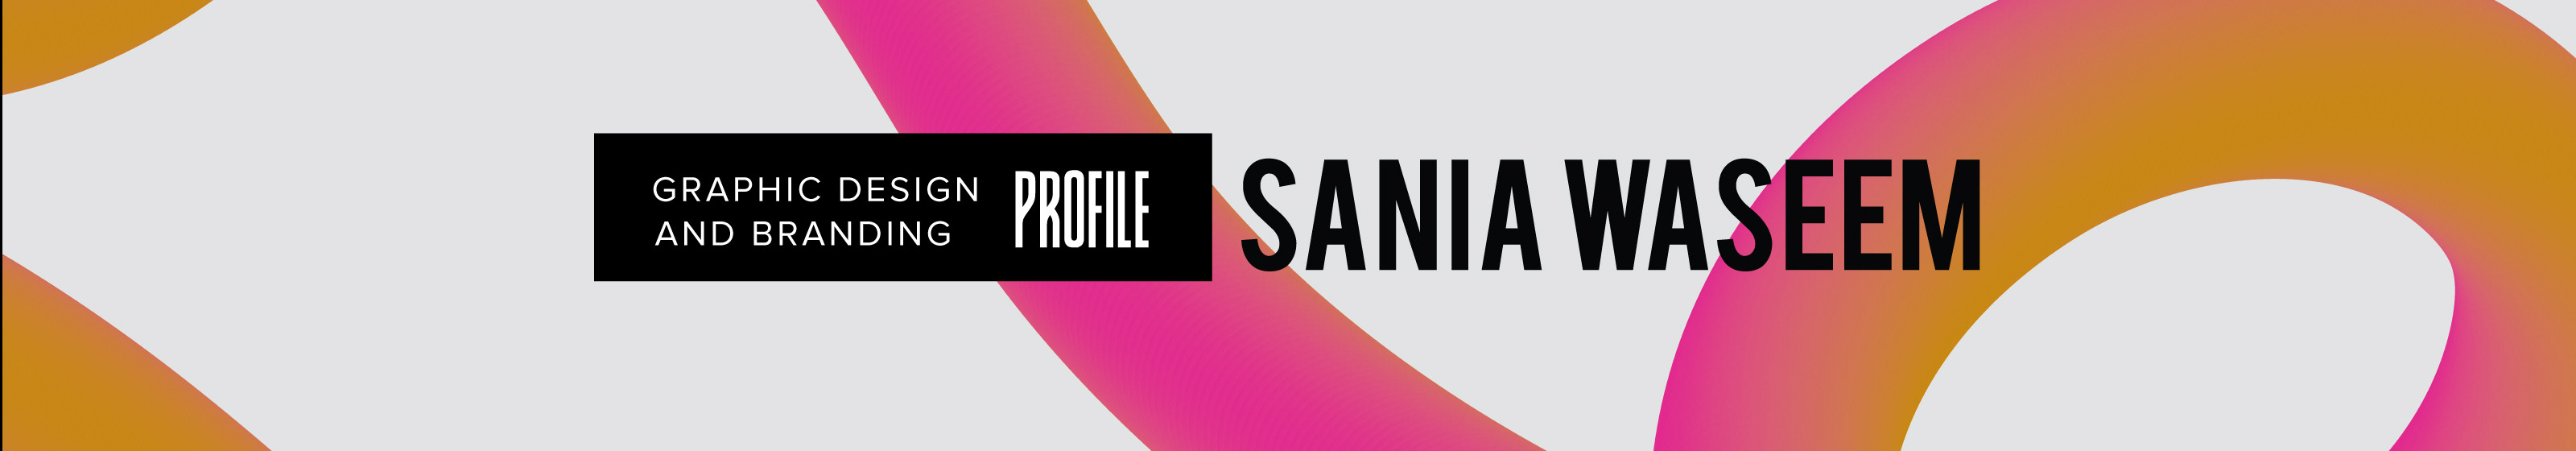 Sania Waseem's profile banner